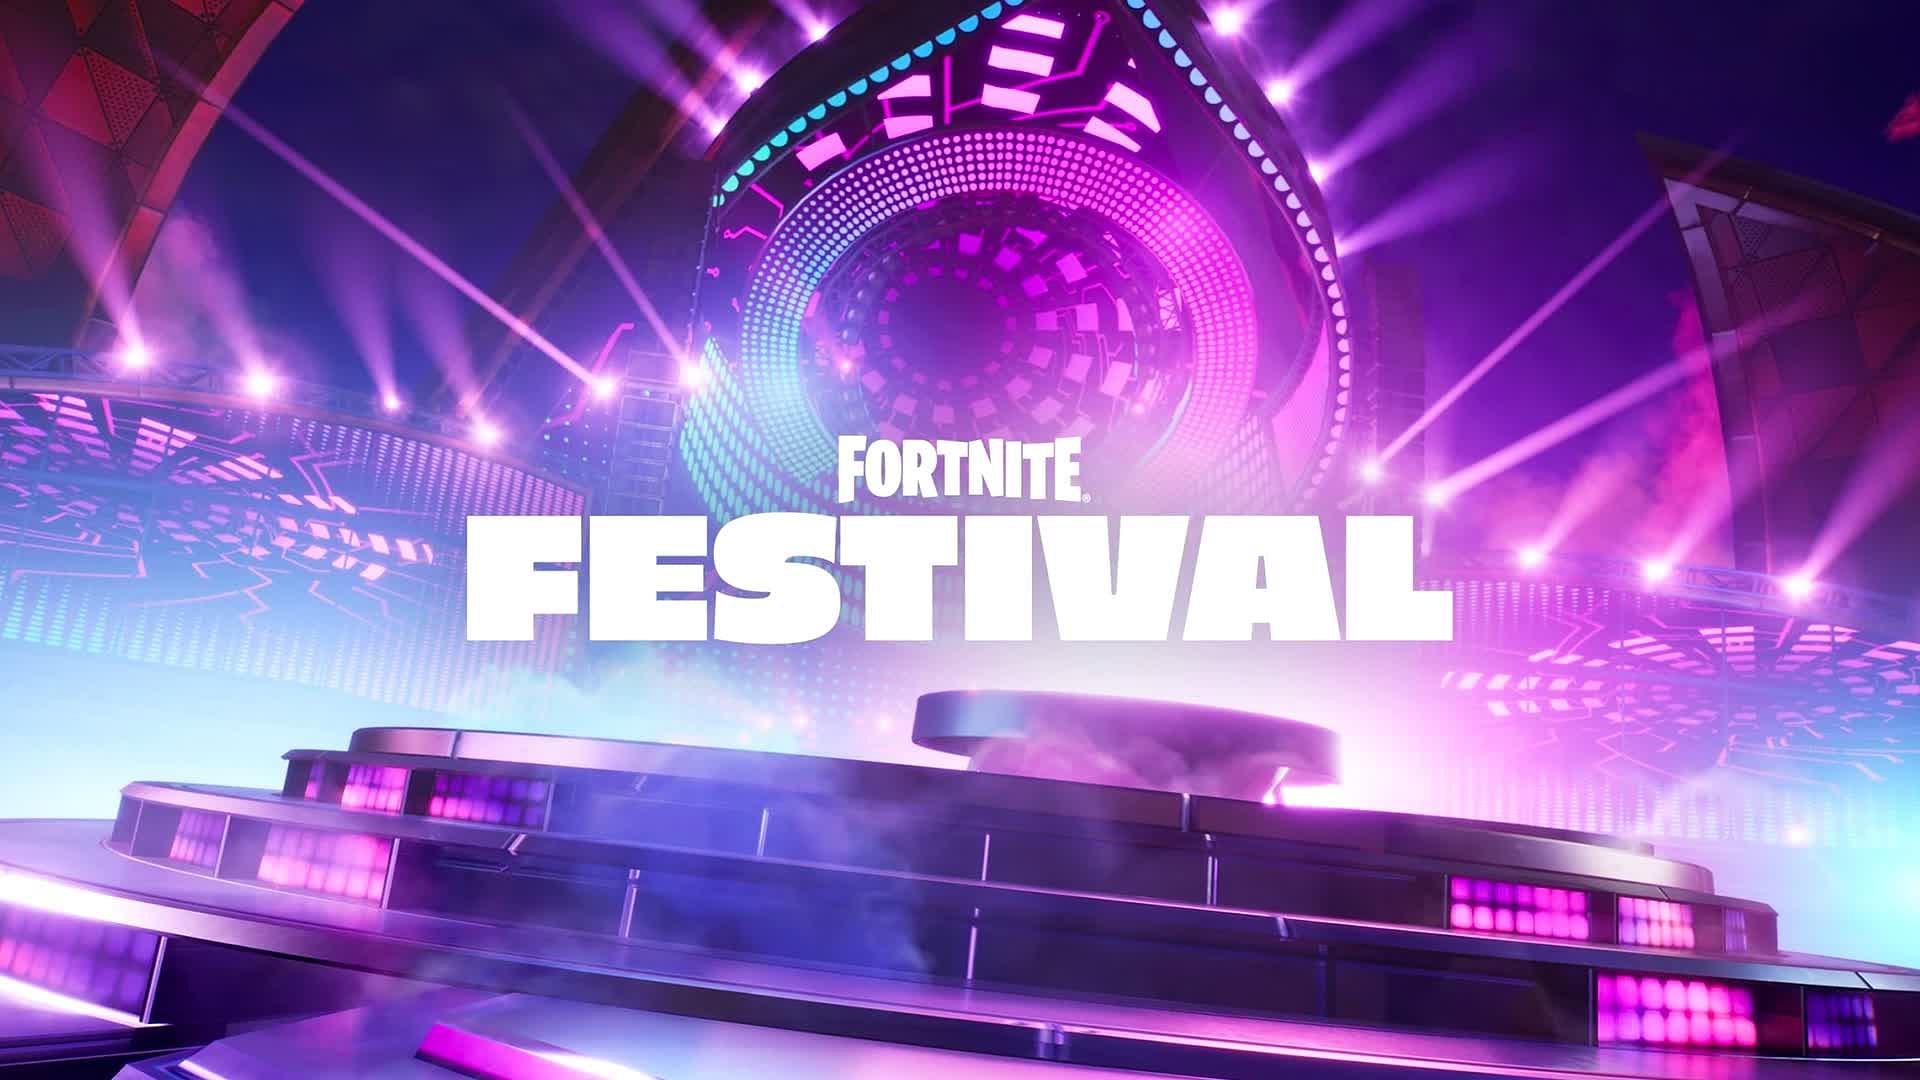 A Fortnite Festival splash screen